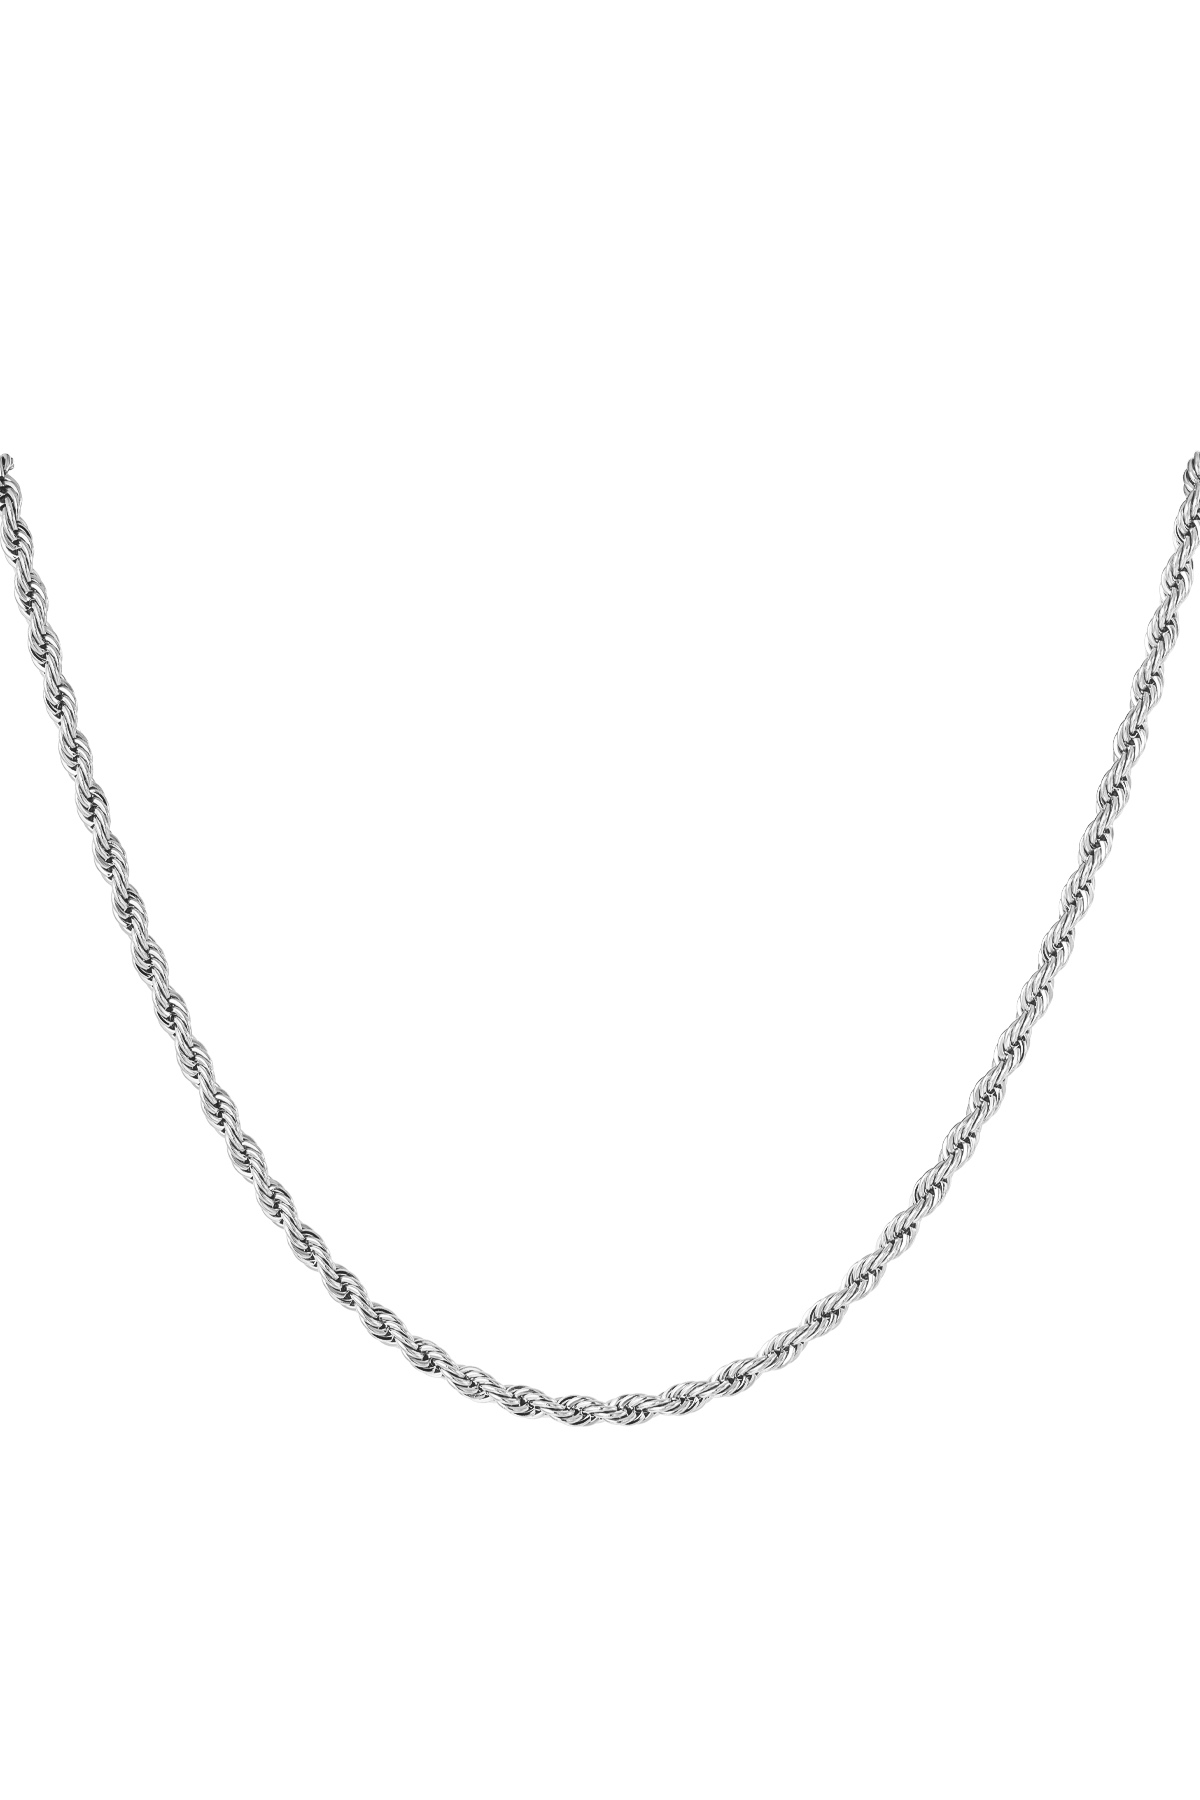 Gedrehte Unisex-Kette lang 60 cm – Silber – 4,0 mm h5 